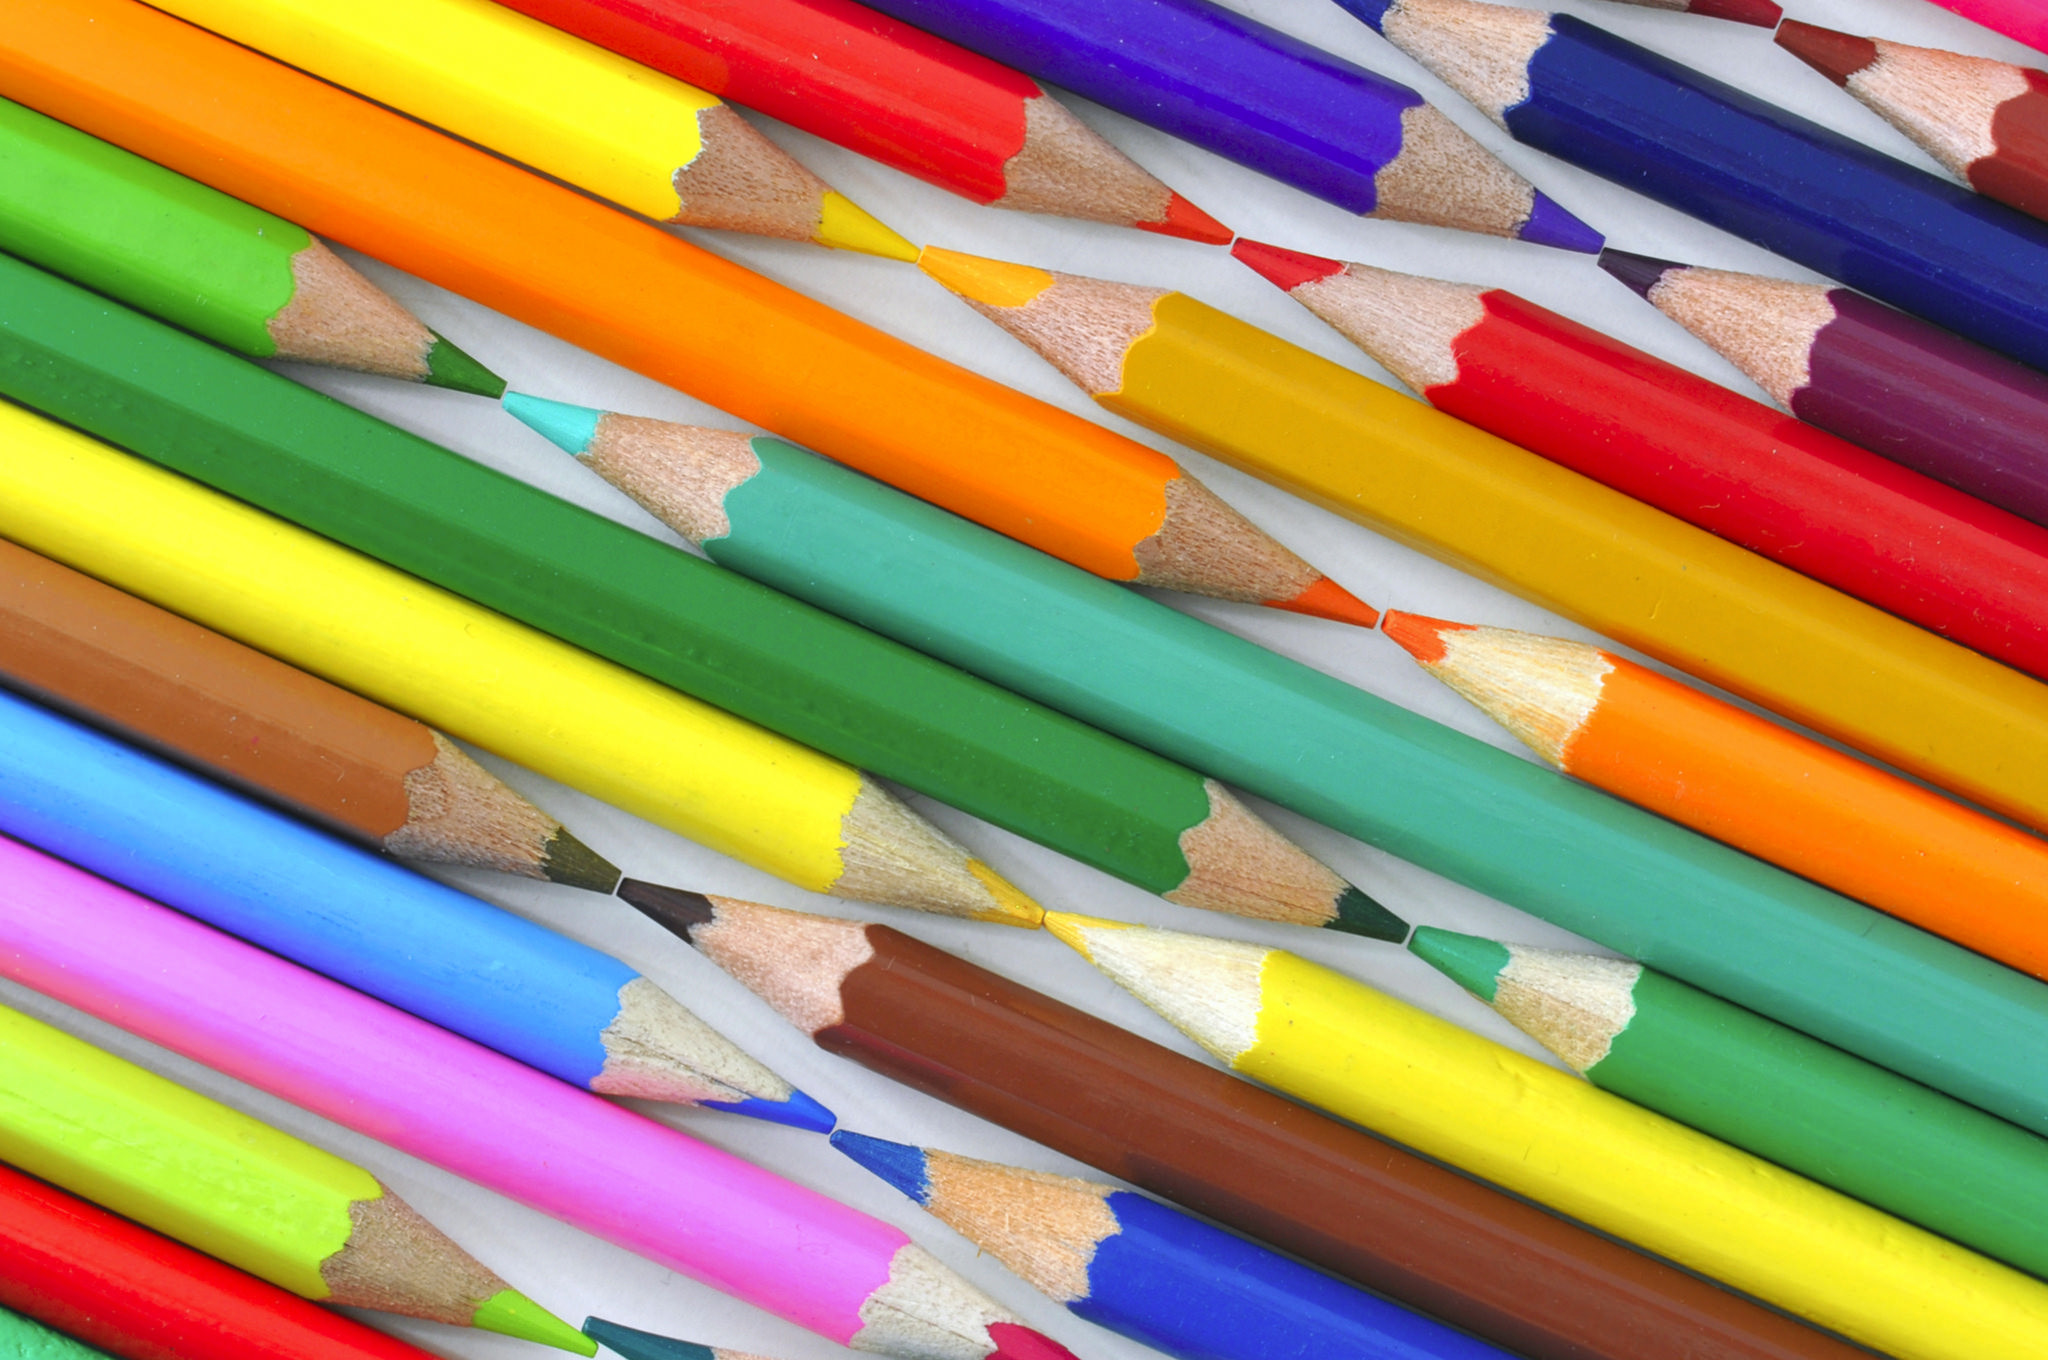 miscellanea, miscellaneous, colored pencils, pencils, rod, colour pencils, kernel HD wallpaper